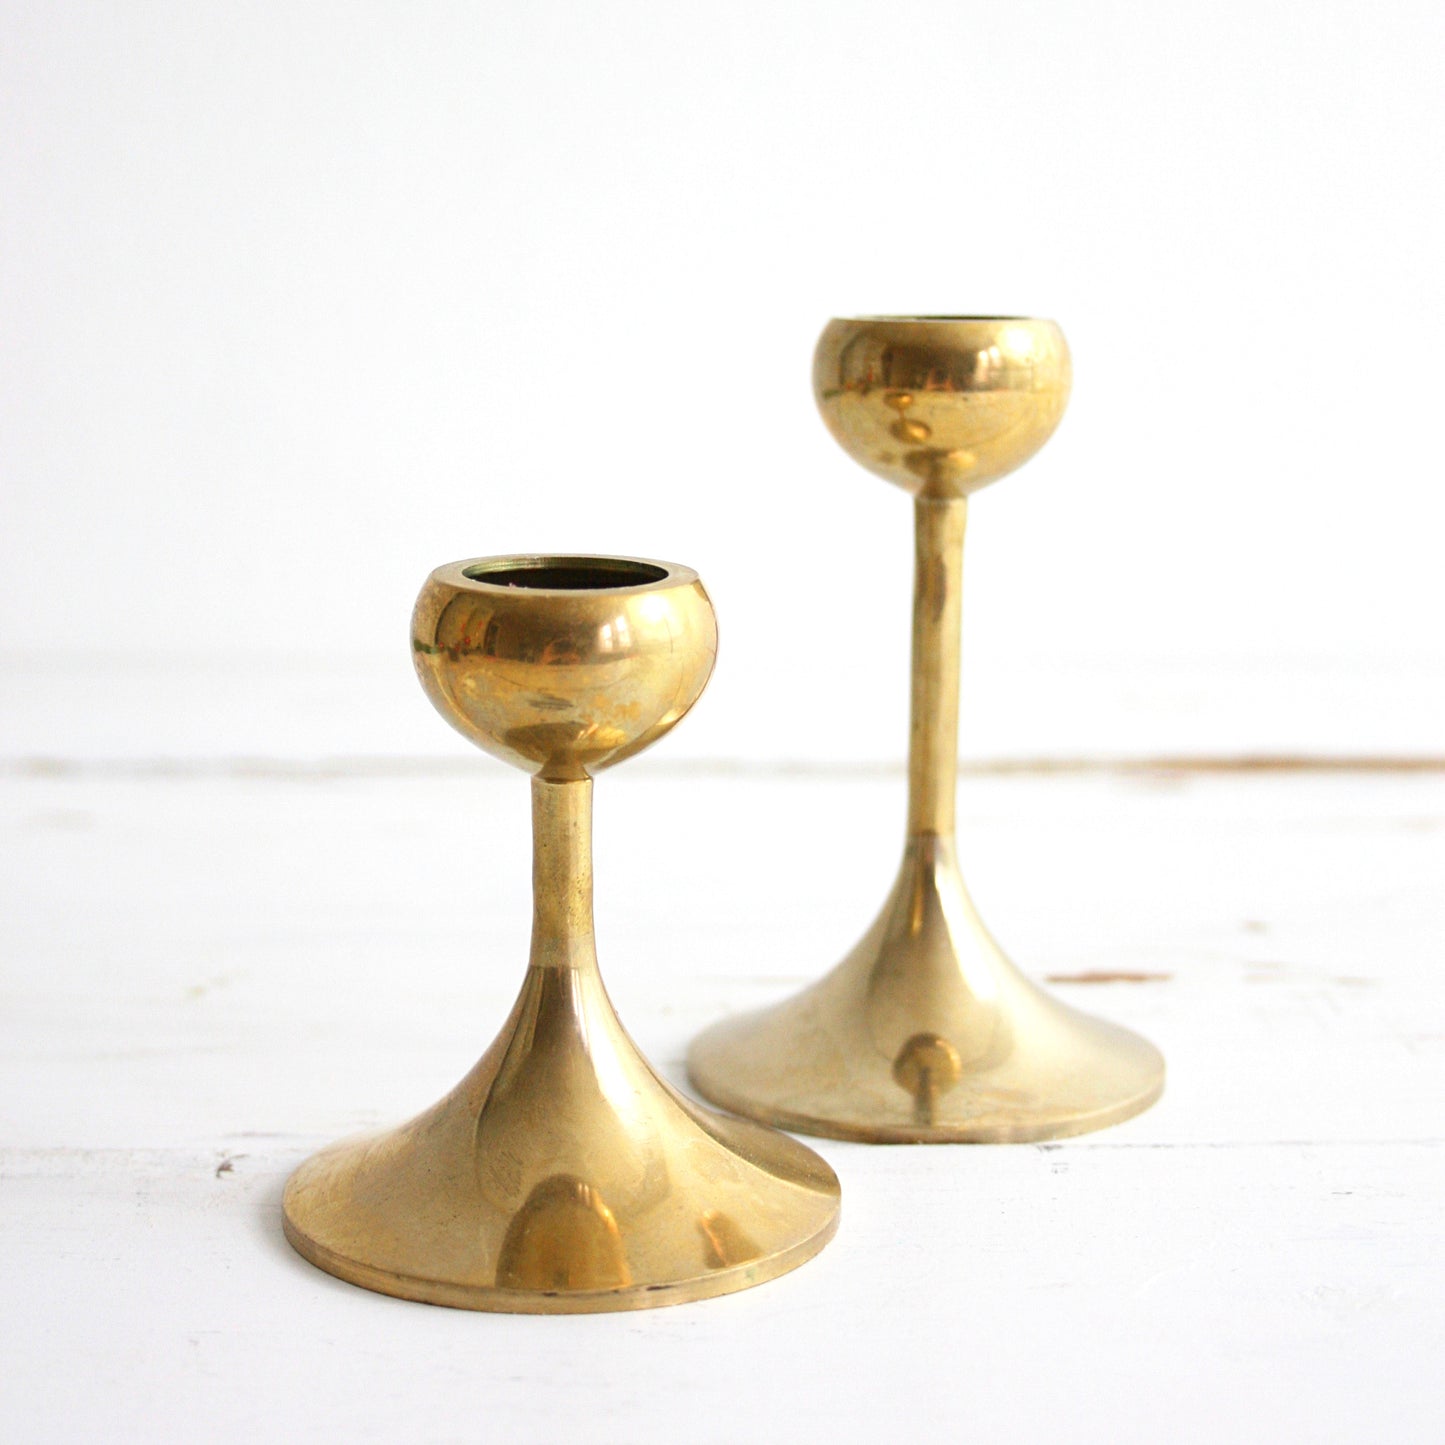 SOLD - Pair of Vintage Brass Candlesticks / Mid Century Modern Brass Candlesticks